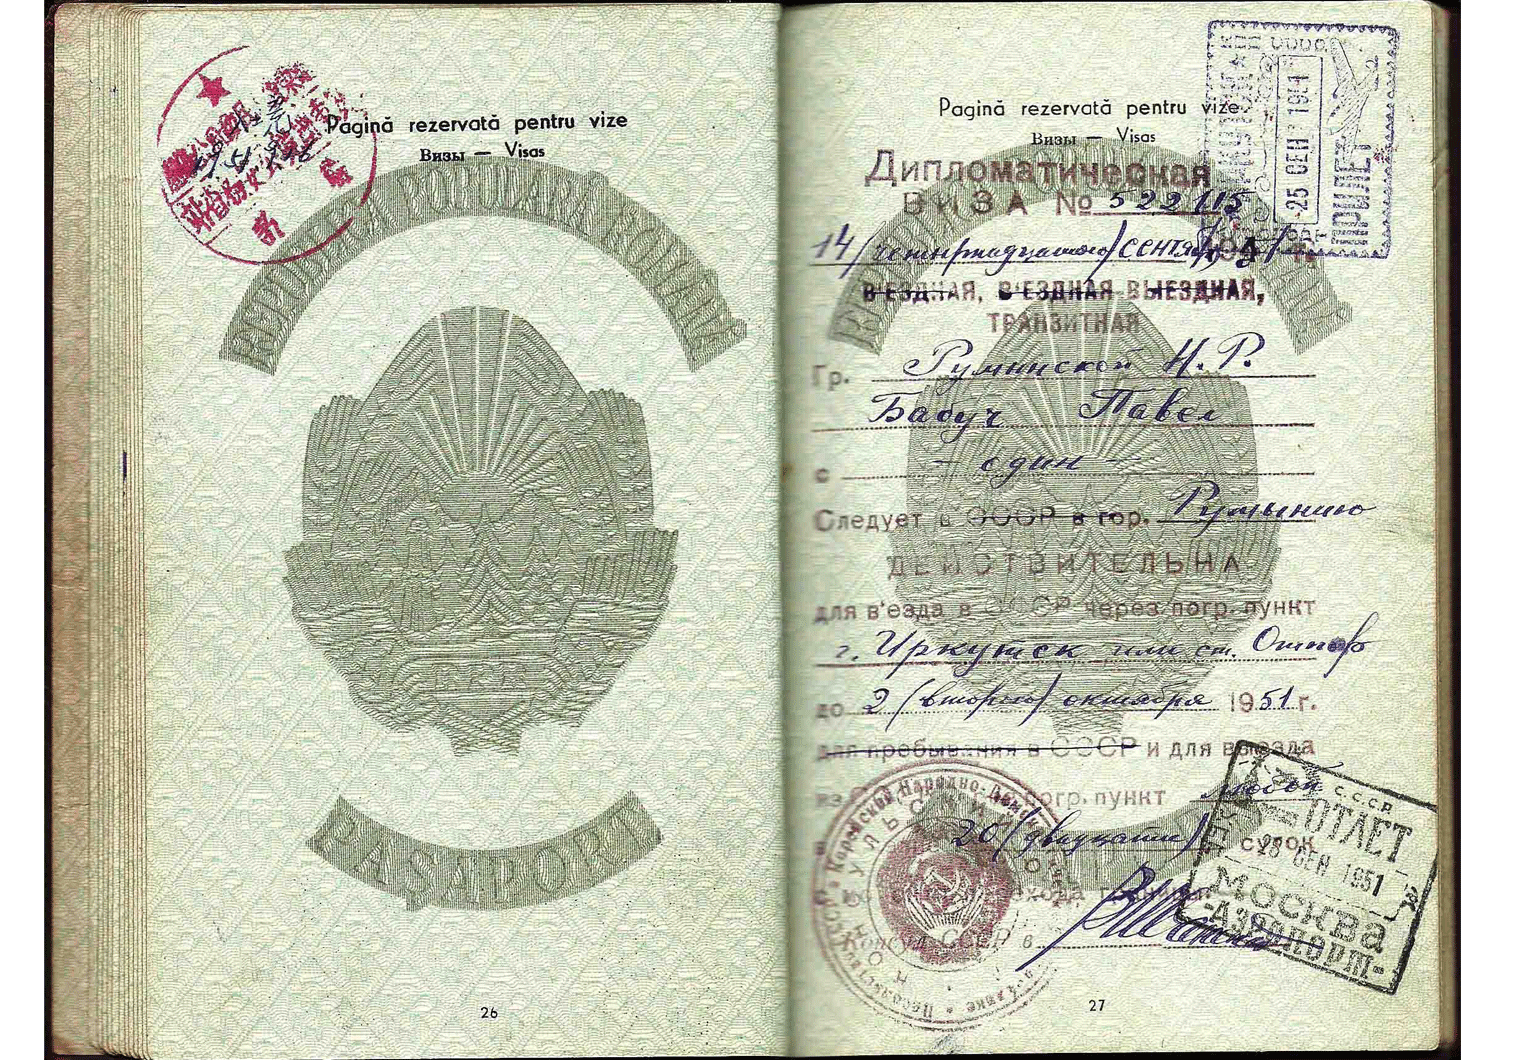 1951 Soviet diplomatic visa inside a passport for North Korea